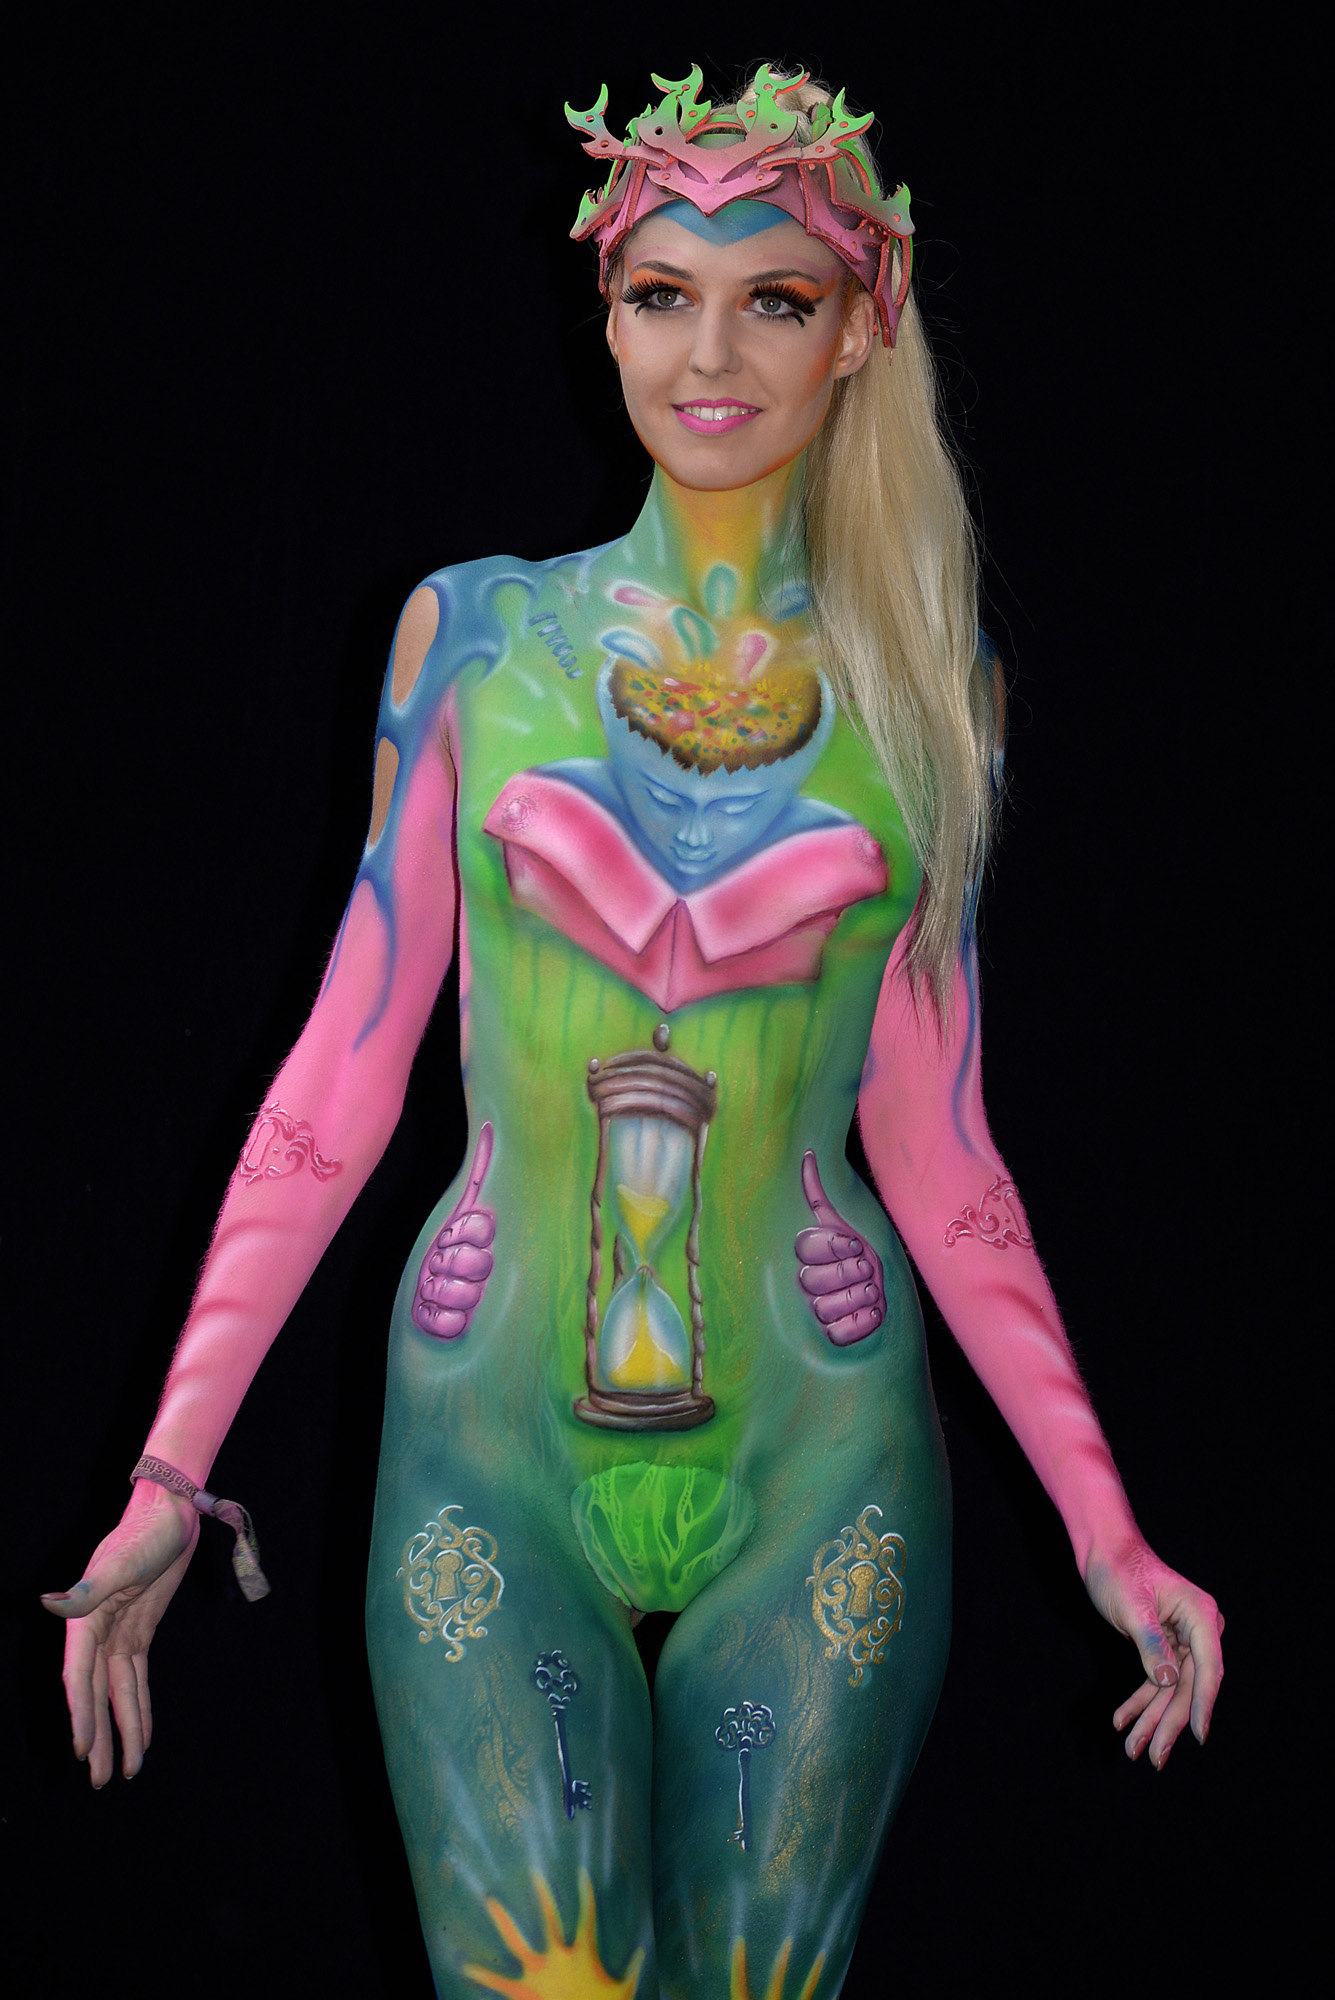 albert israel add female body painting festival photo